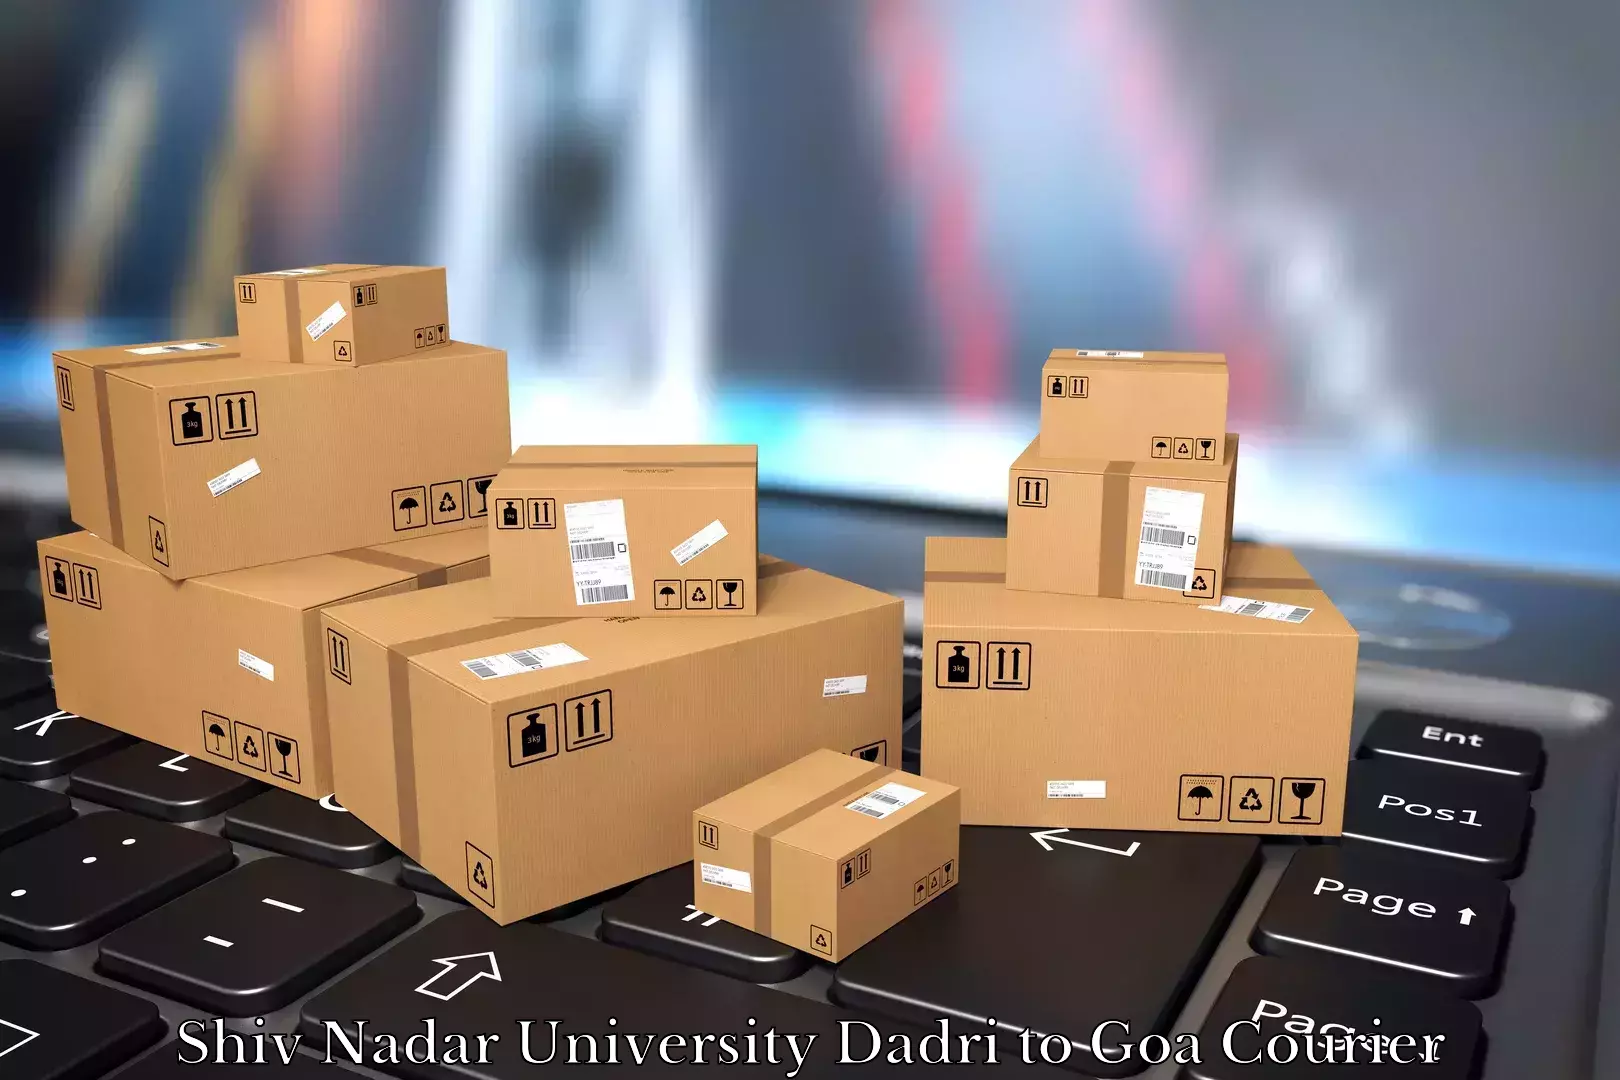 Furniture delivery service Shiv Nadar University Dadri to NIT Goa